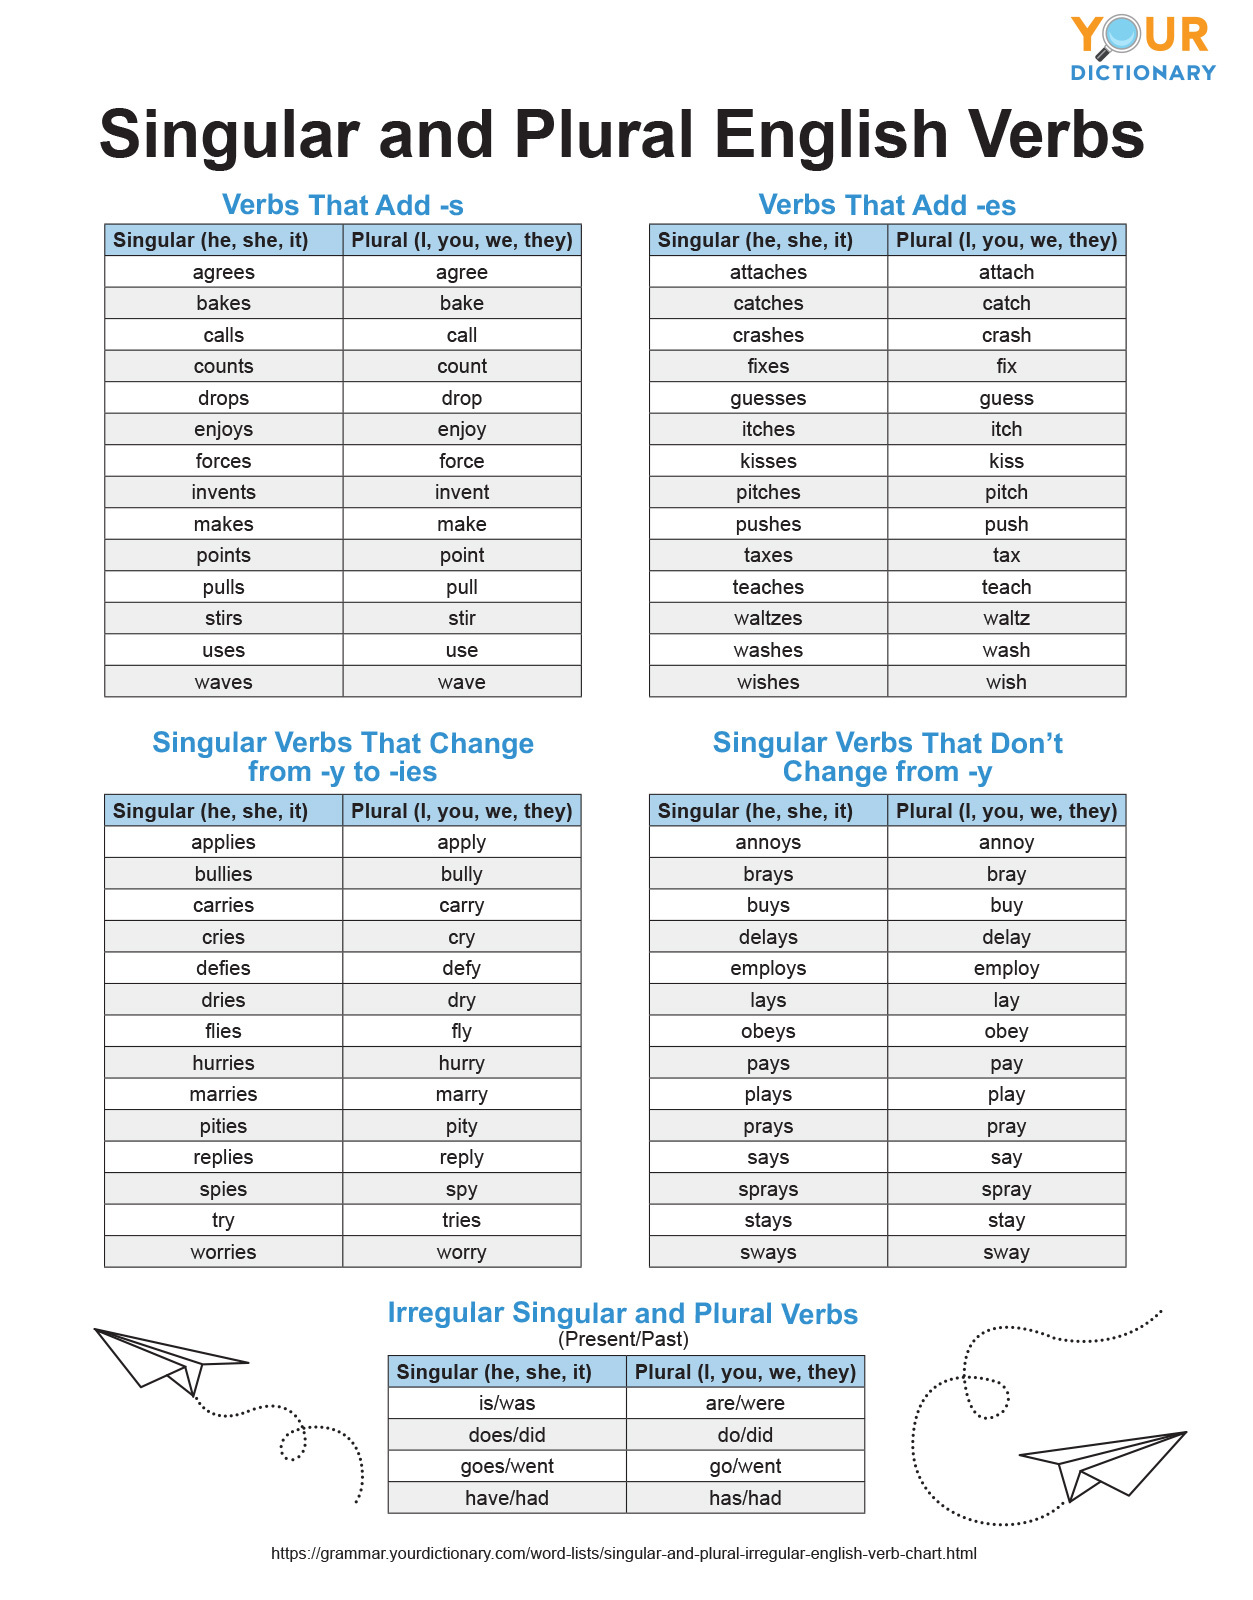 Singular and Plural English Verbs Chart